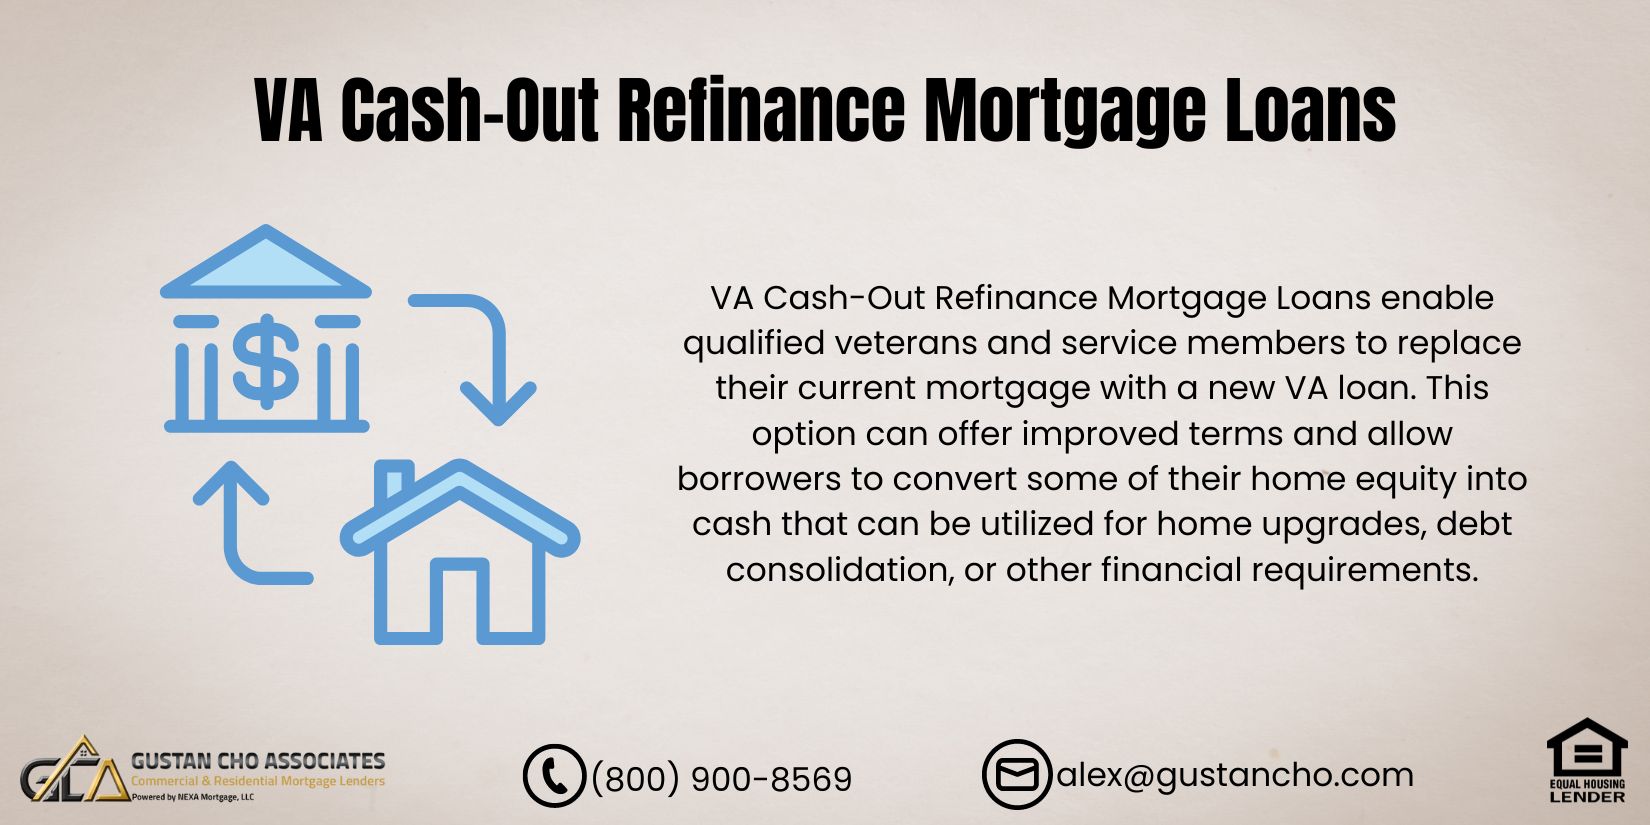 VA Cash-Out Refinance Mortgage Loans